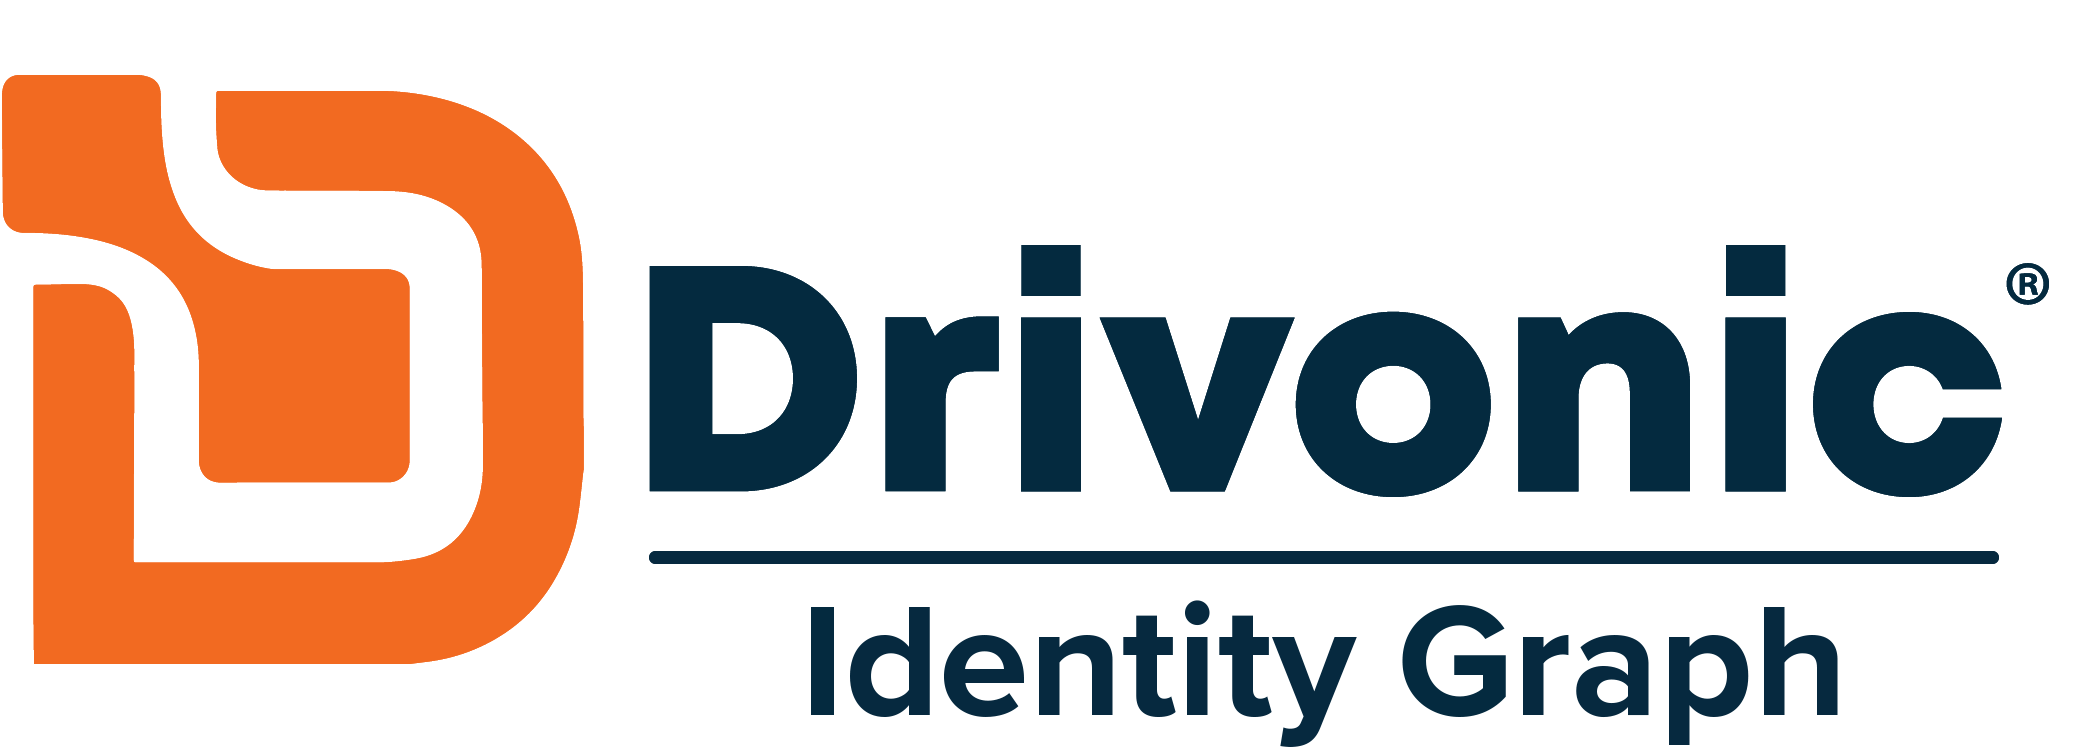 Drivonic Logo - Identity Graph (2)M